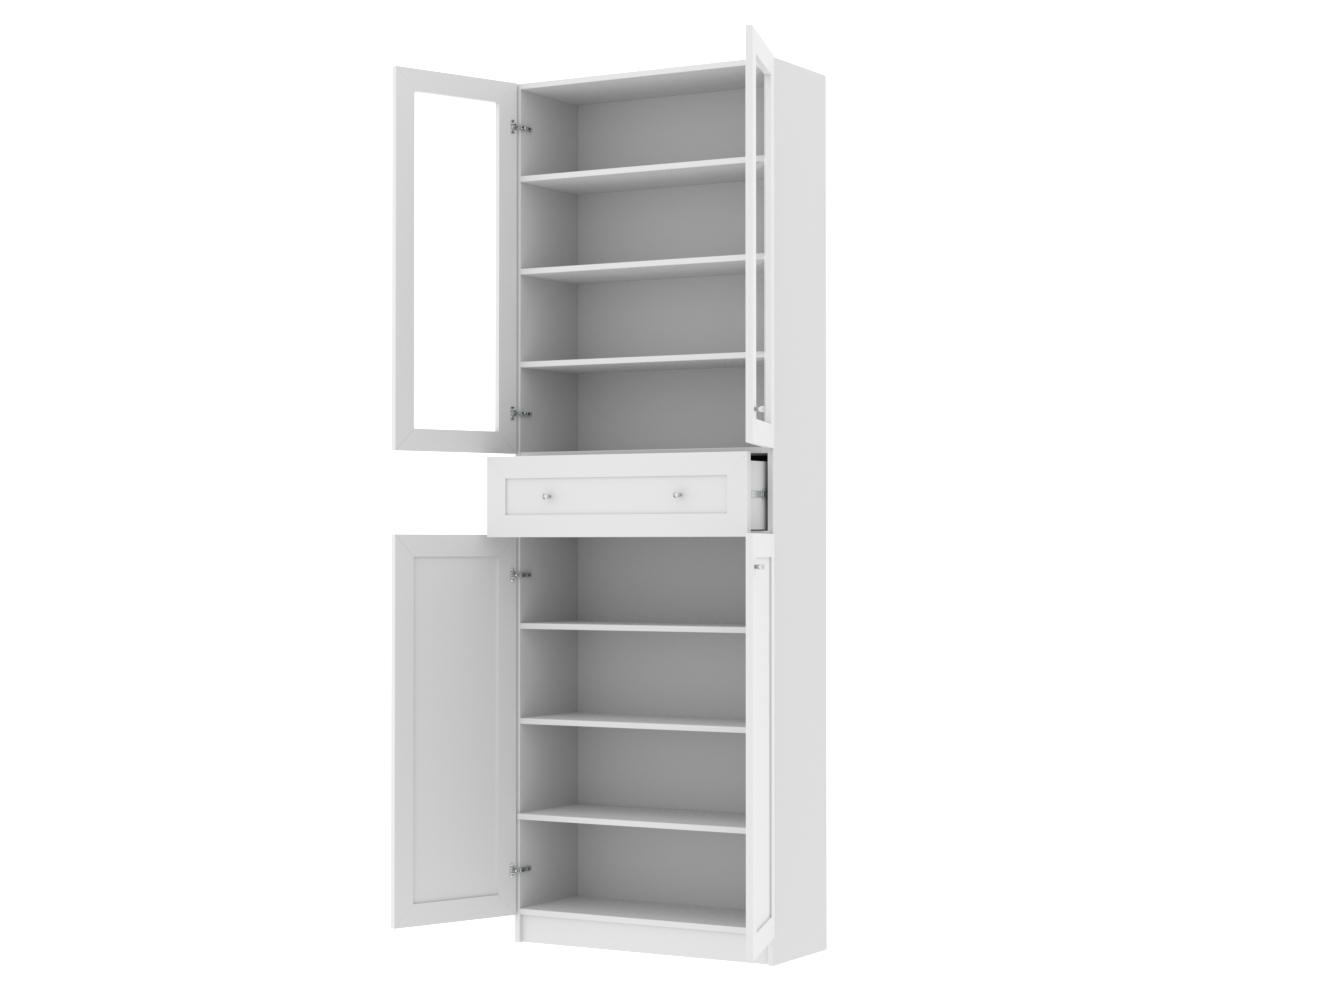 Книжный шкаф Билли 314 white ИКЕА (IKEA) изображение товара